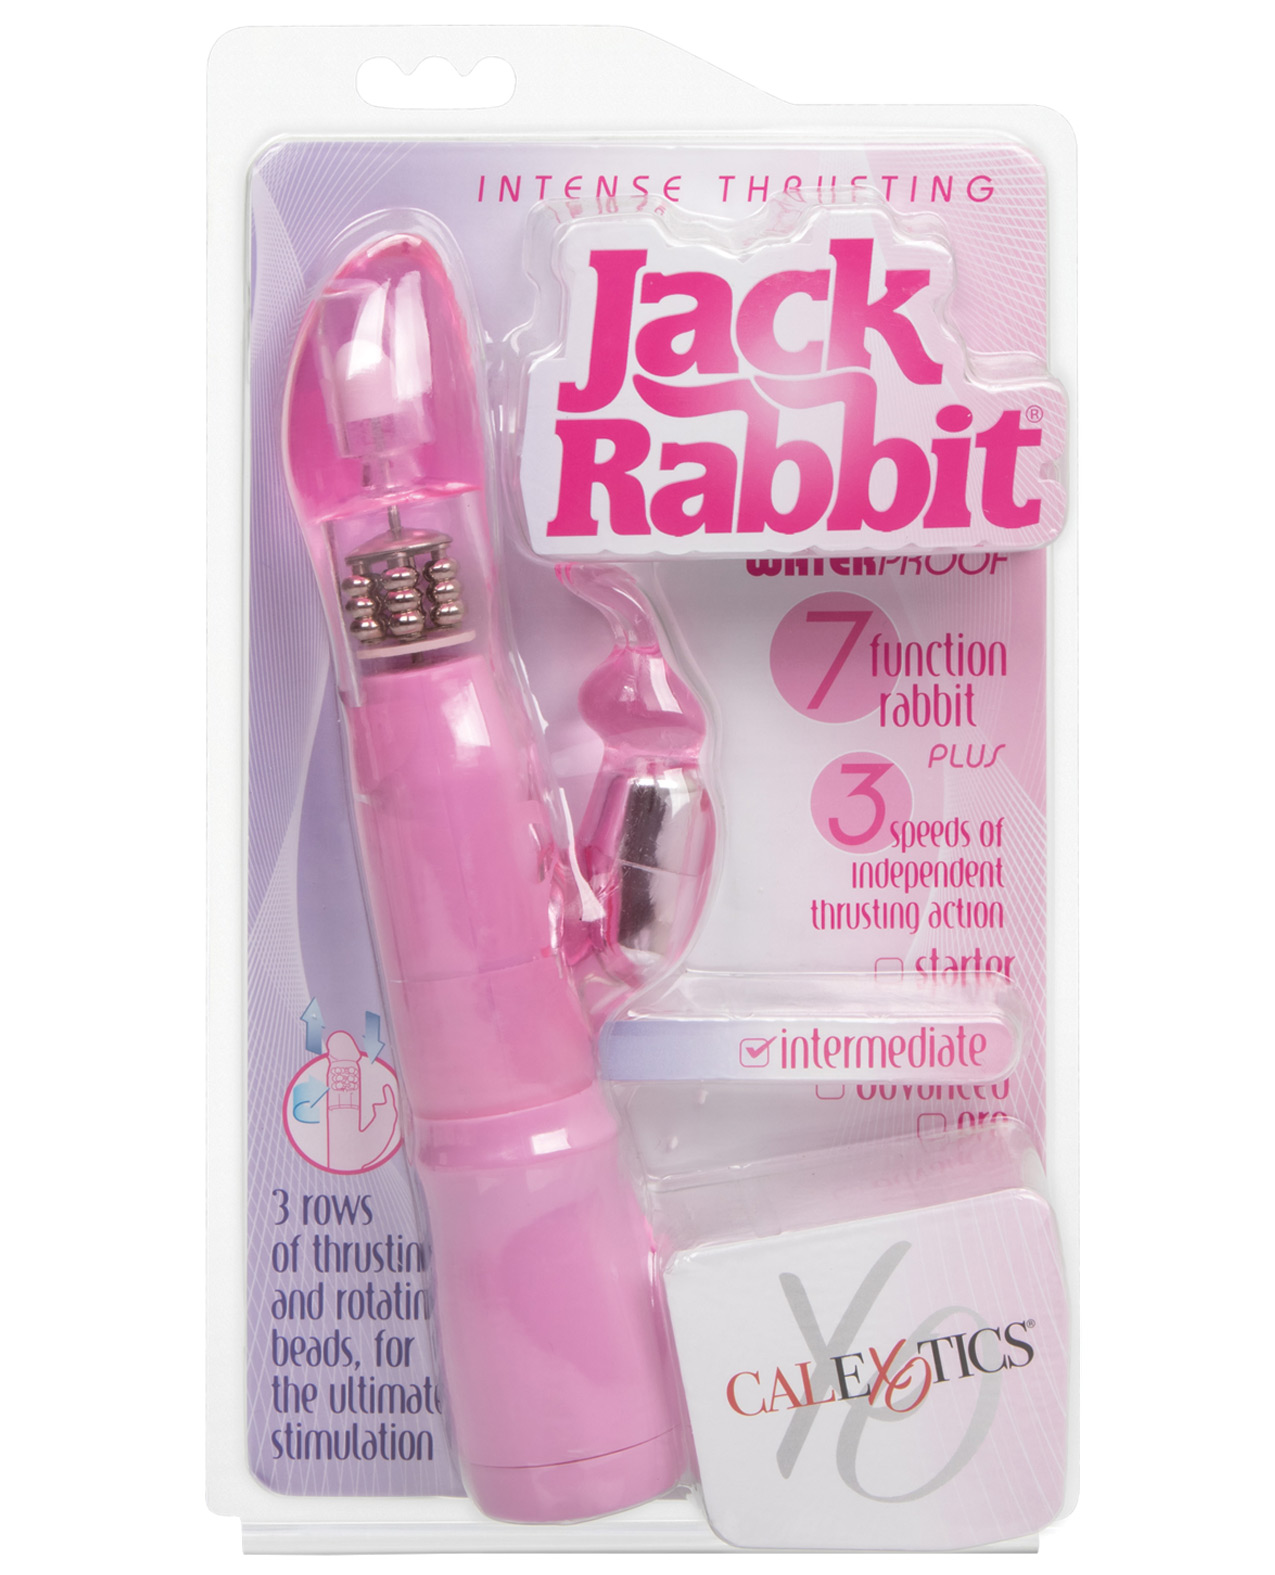 Jack rabit sex toy being used